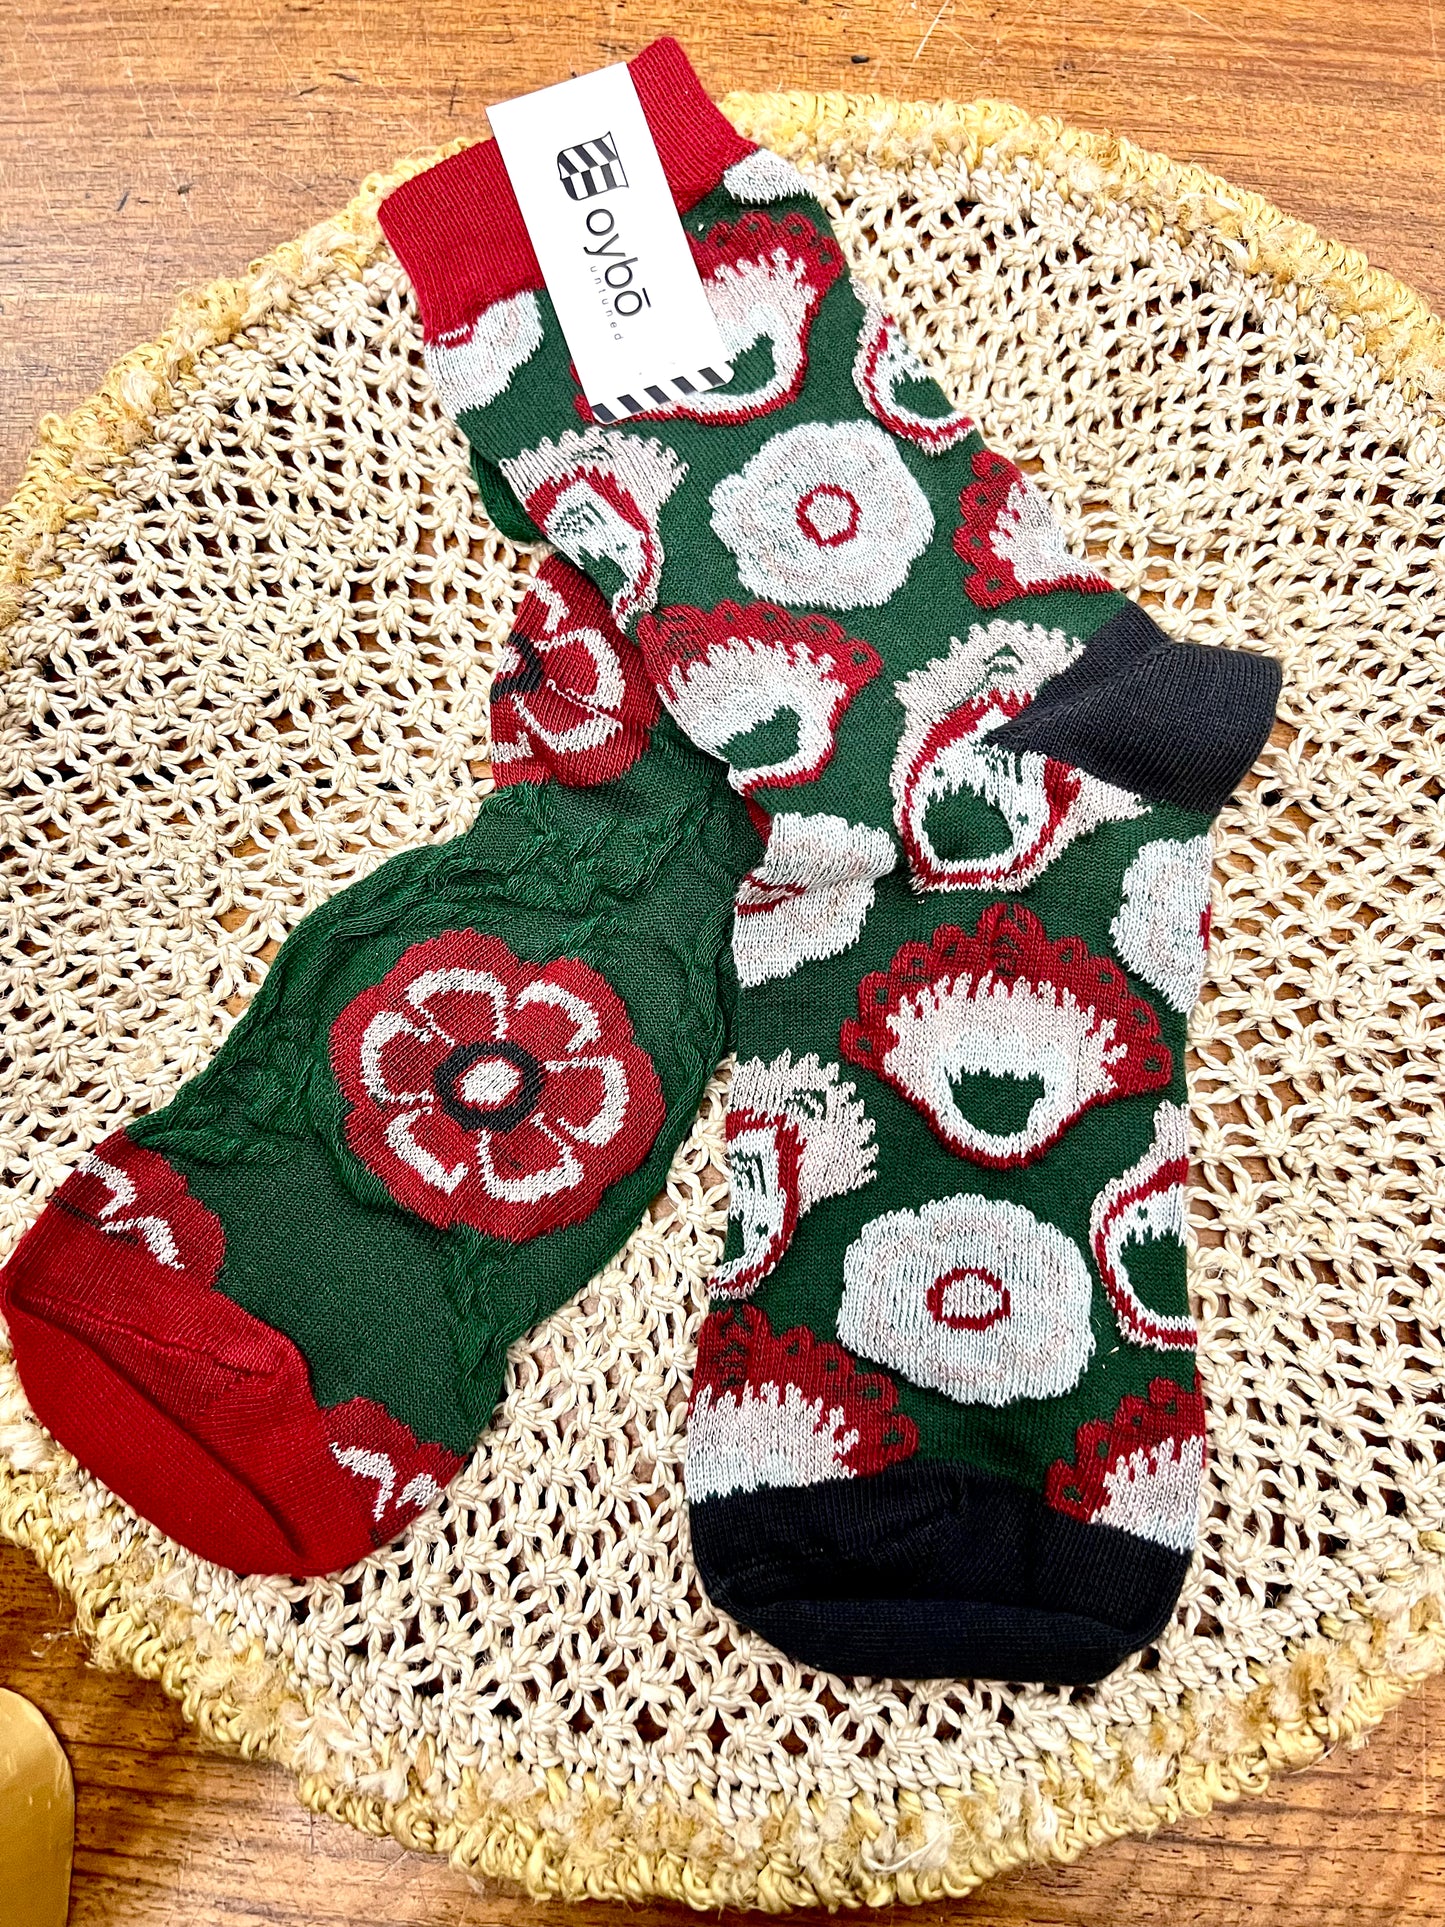 Calzini Spaiati Oybo’ Untuned Socks “Capsule Soire’ New”